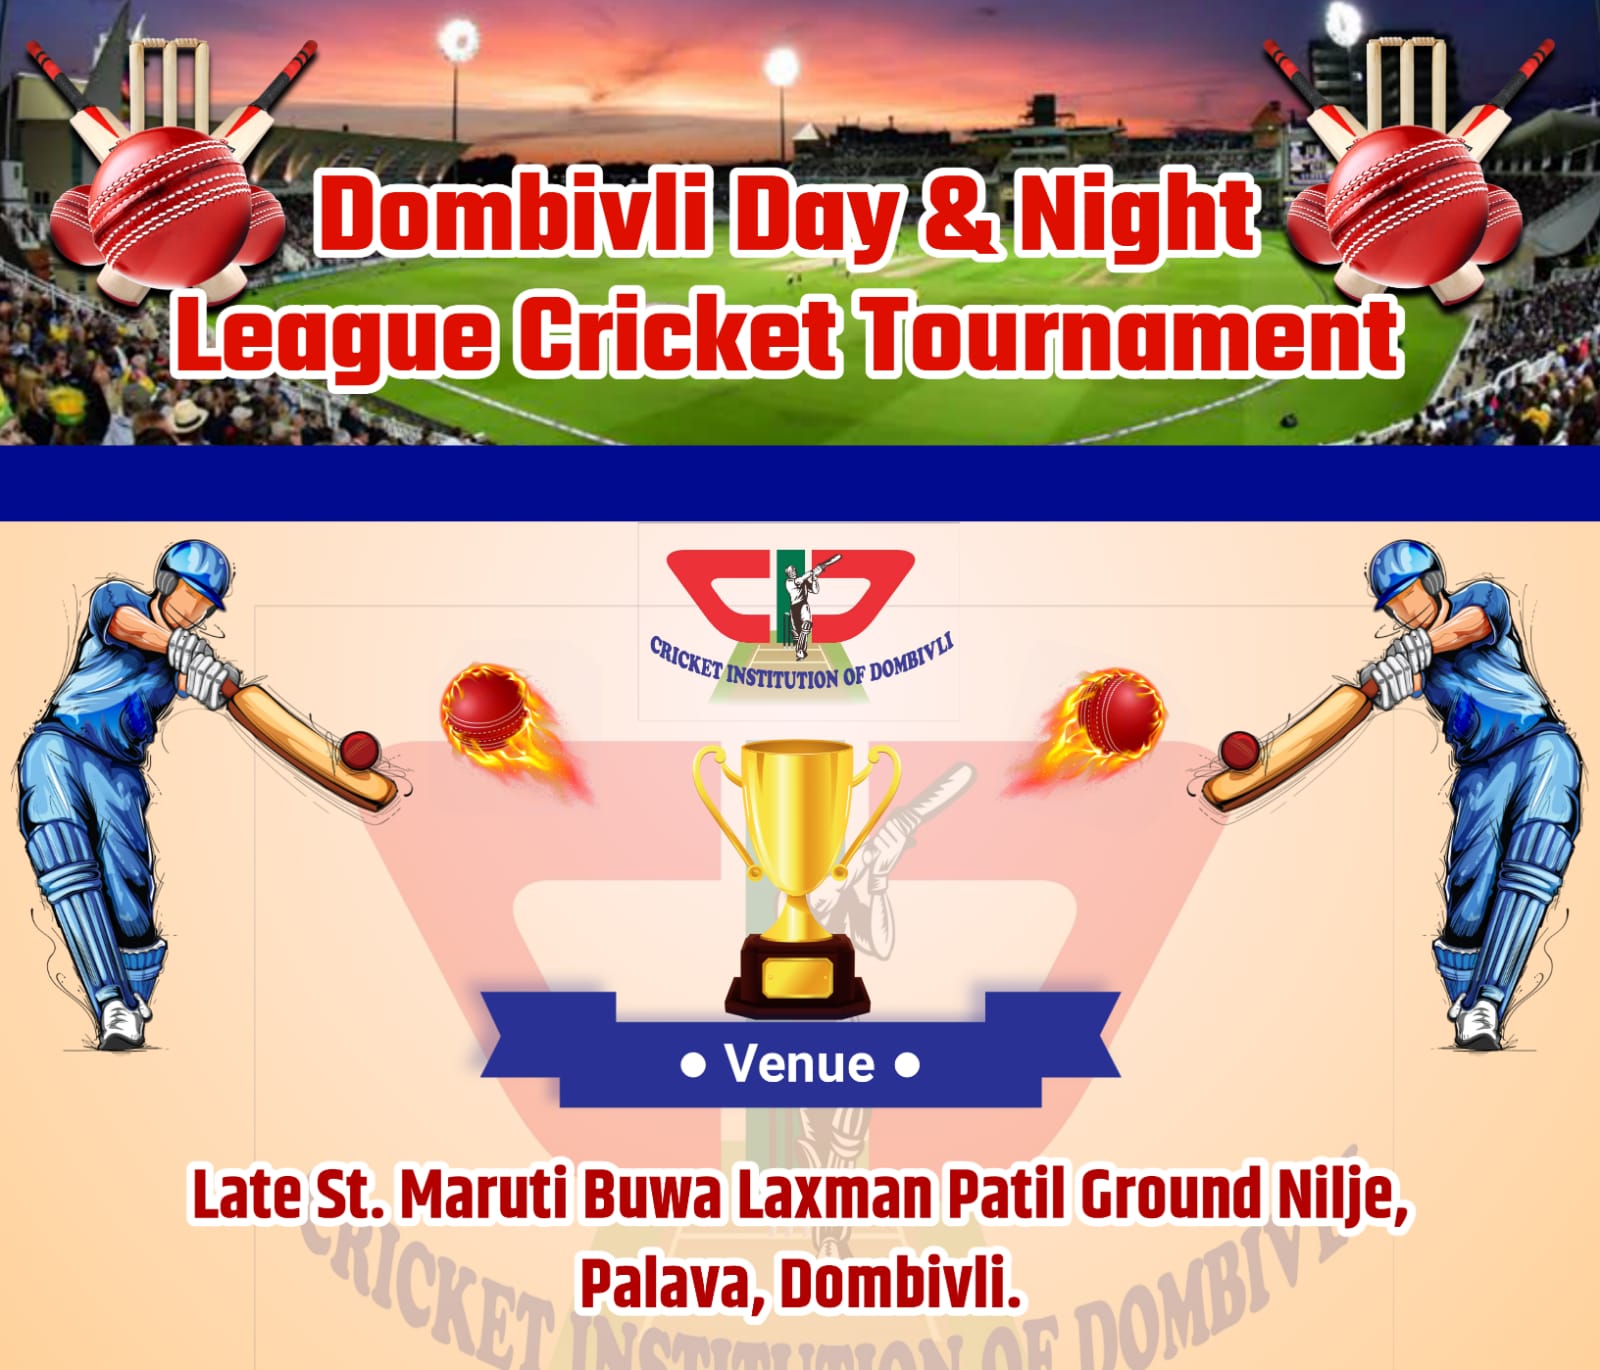 Dombivli Day & Night League Cricket Tournament 2022